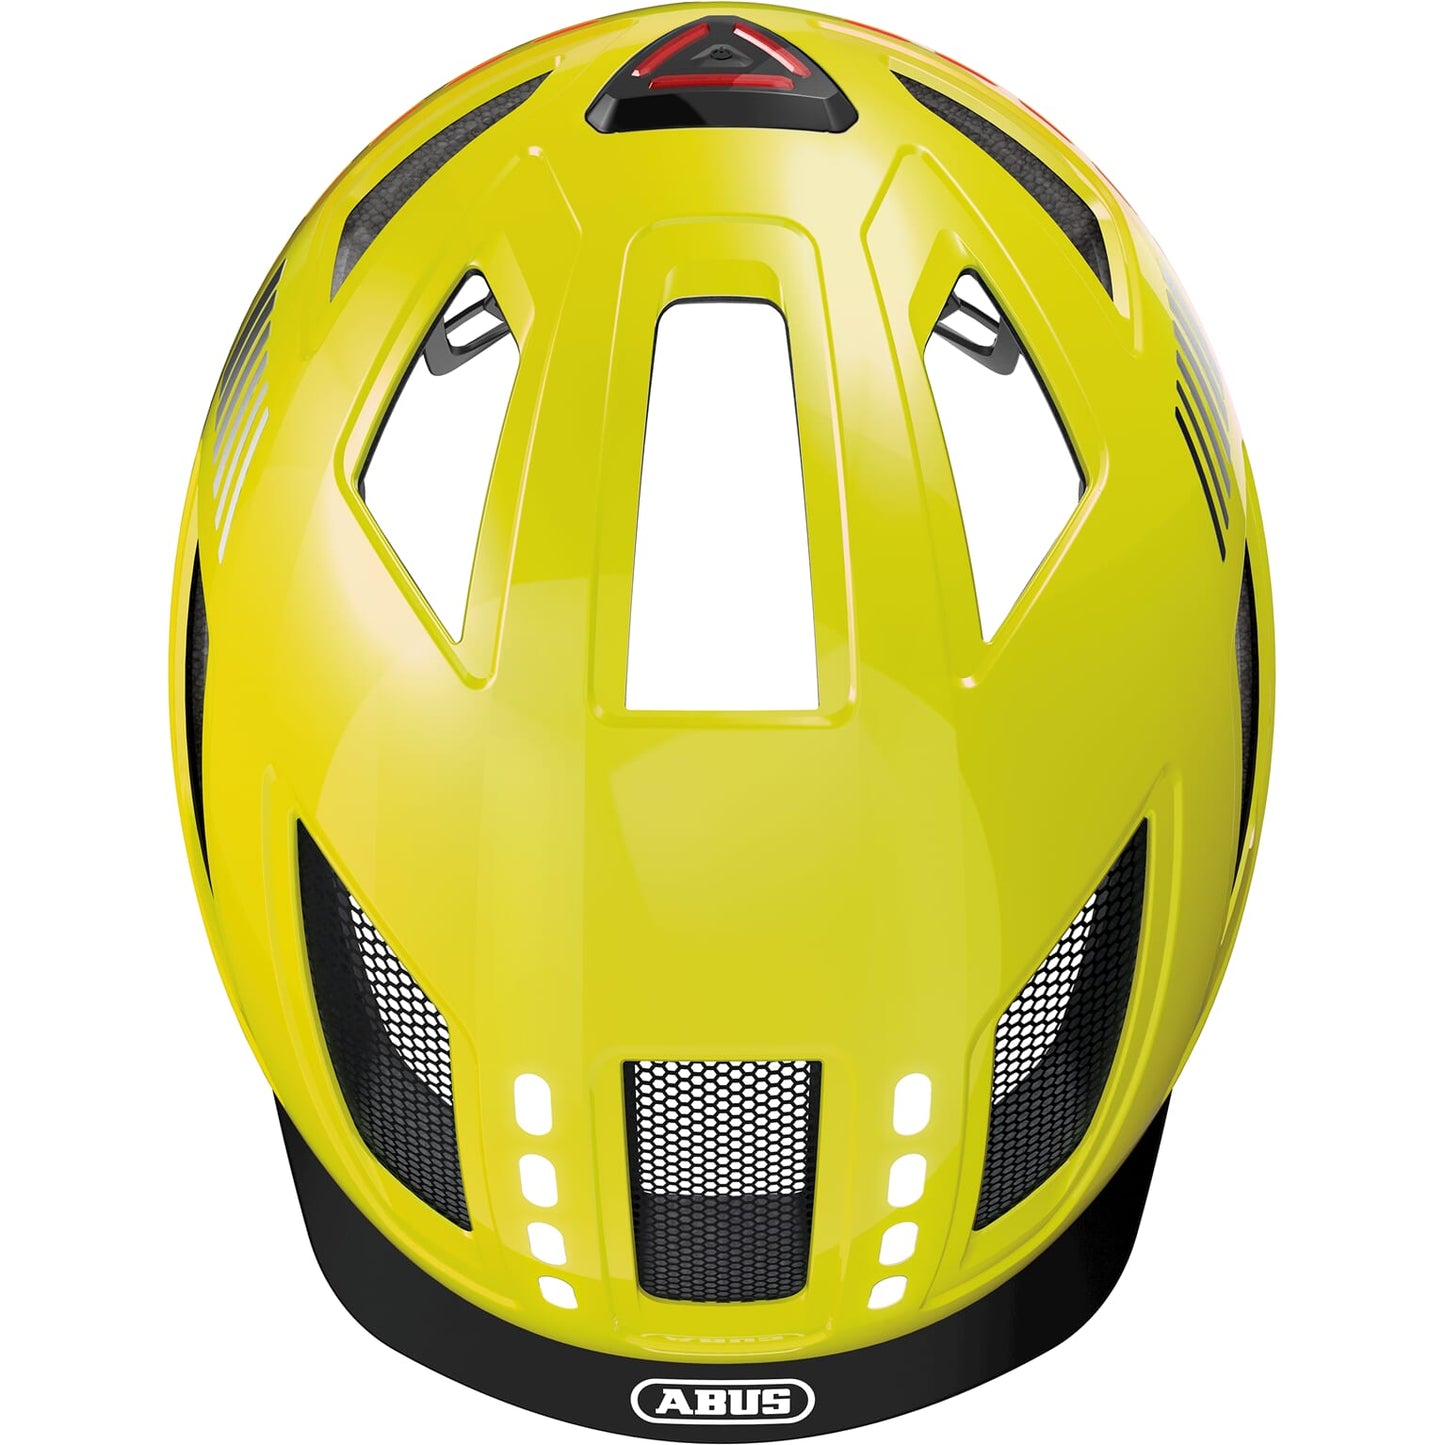 ABUS Helmet Hyban 2.0 LED segnale giallo L 56-61 cm